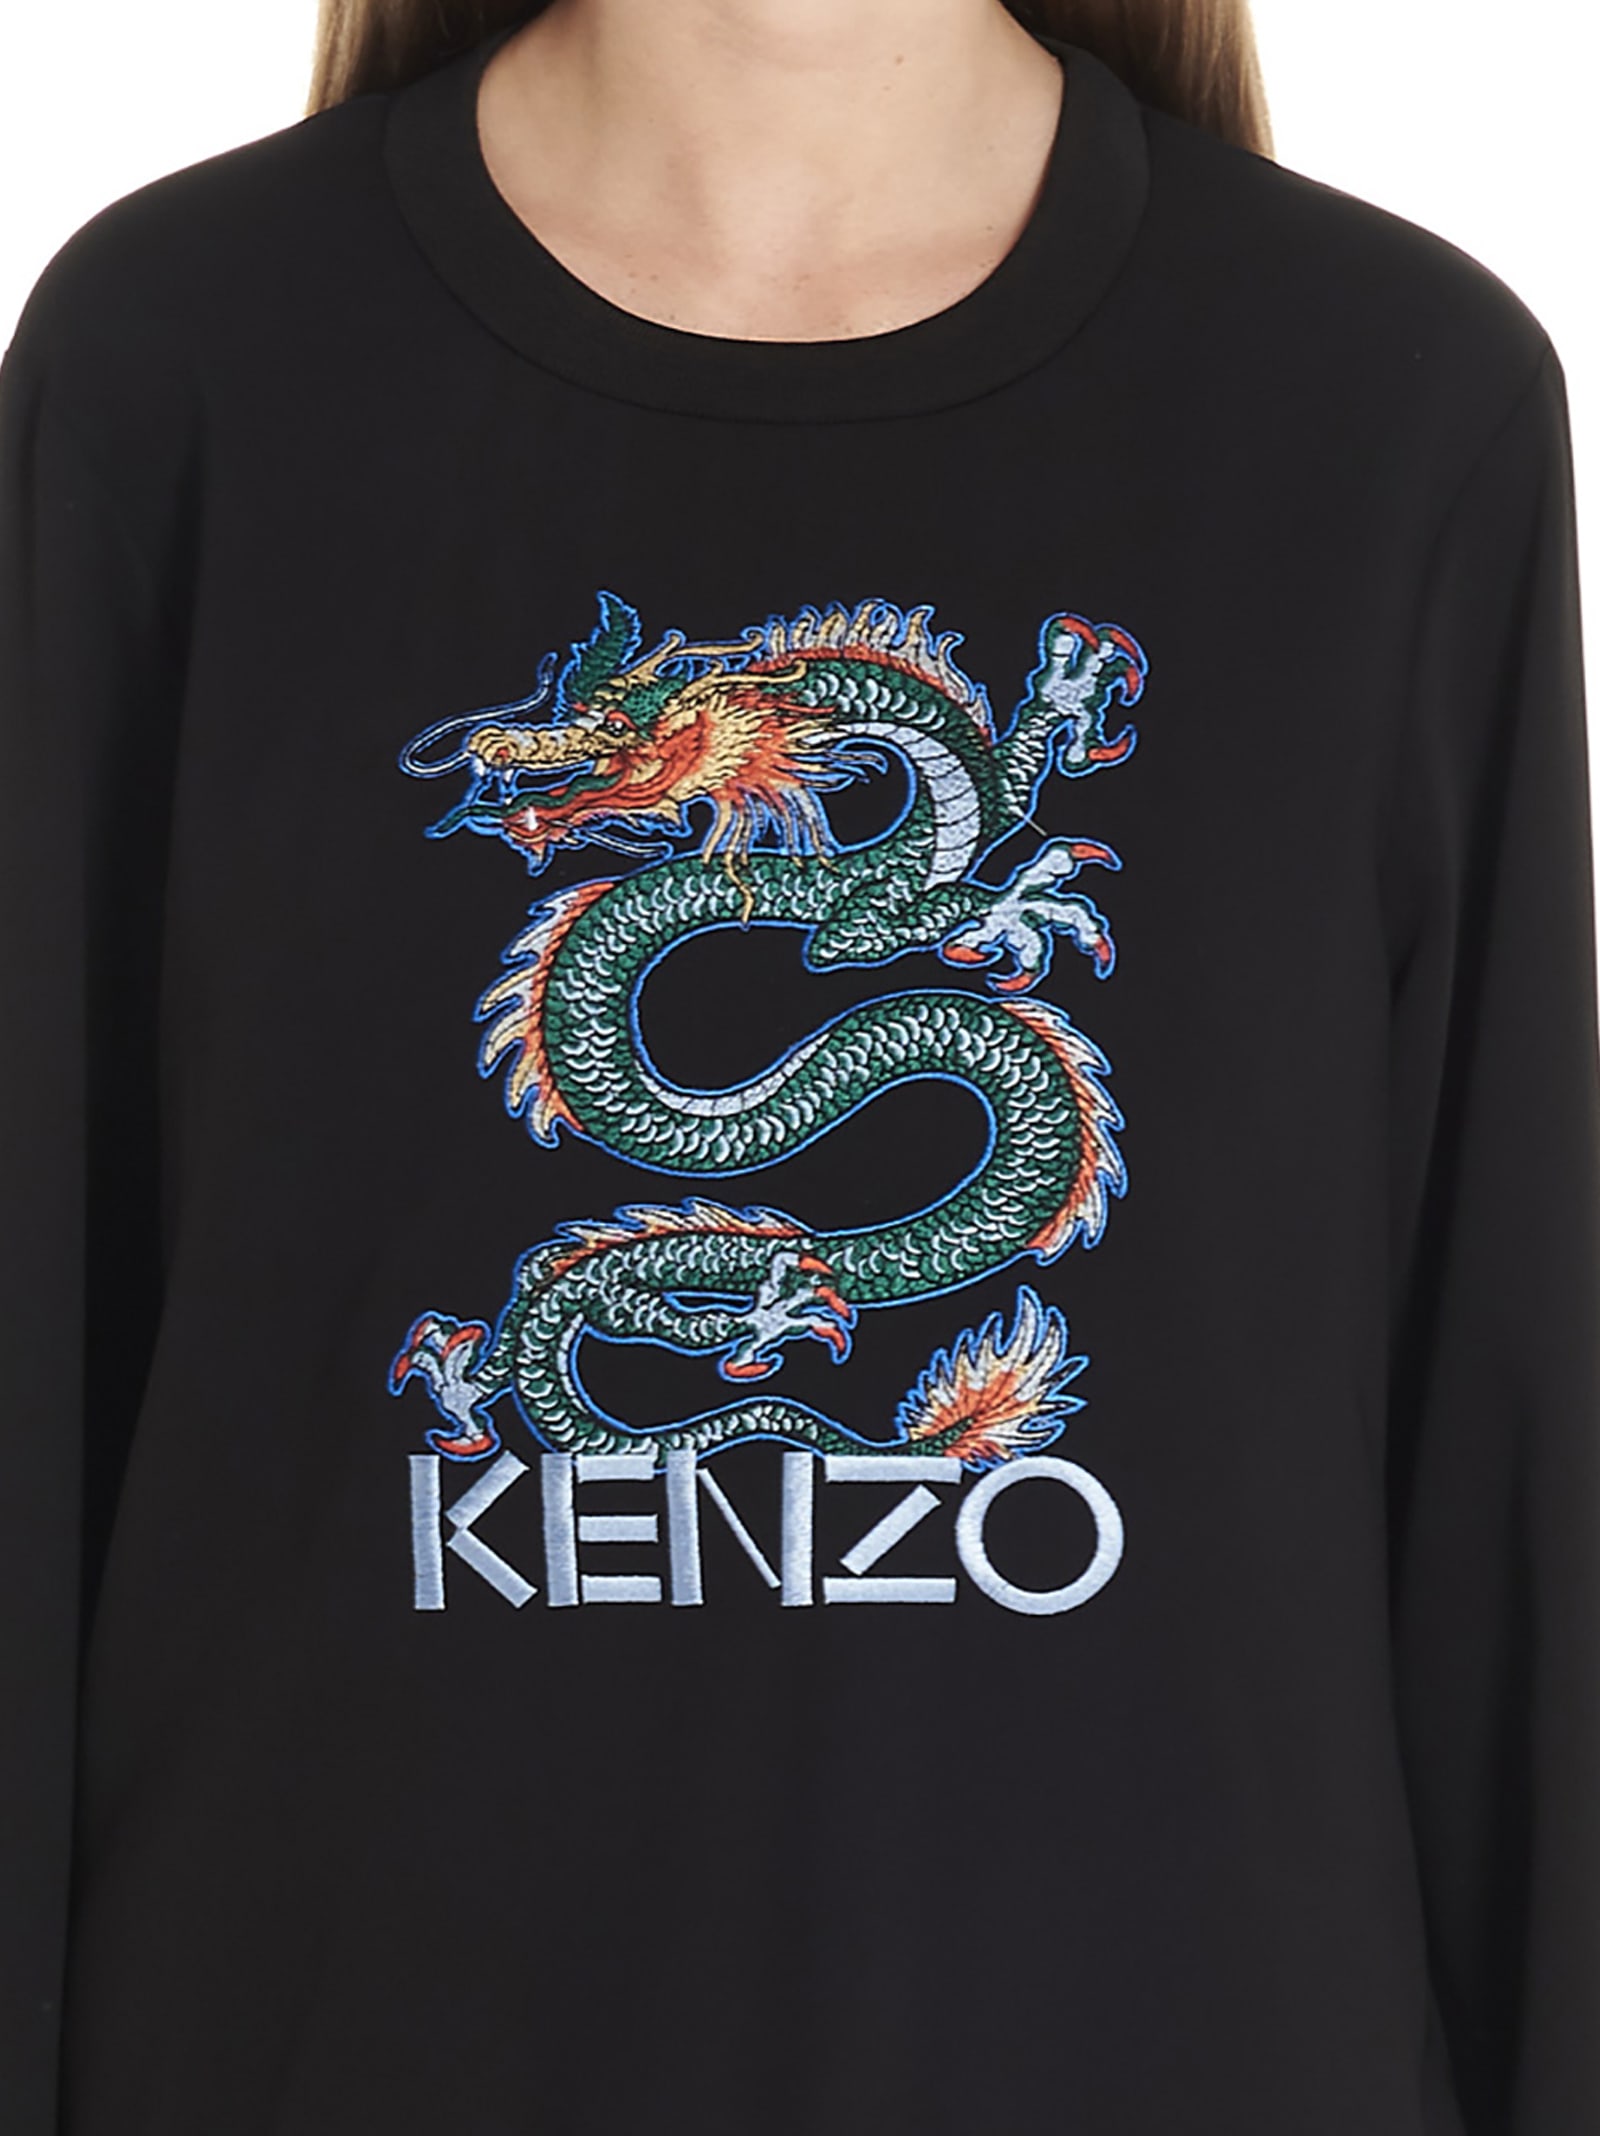 kenzo dragon jumper